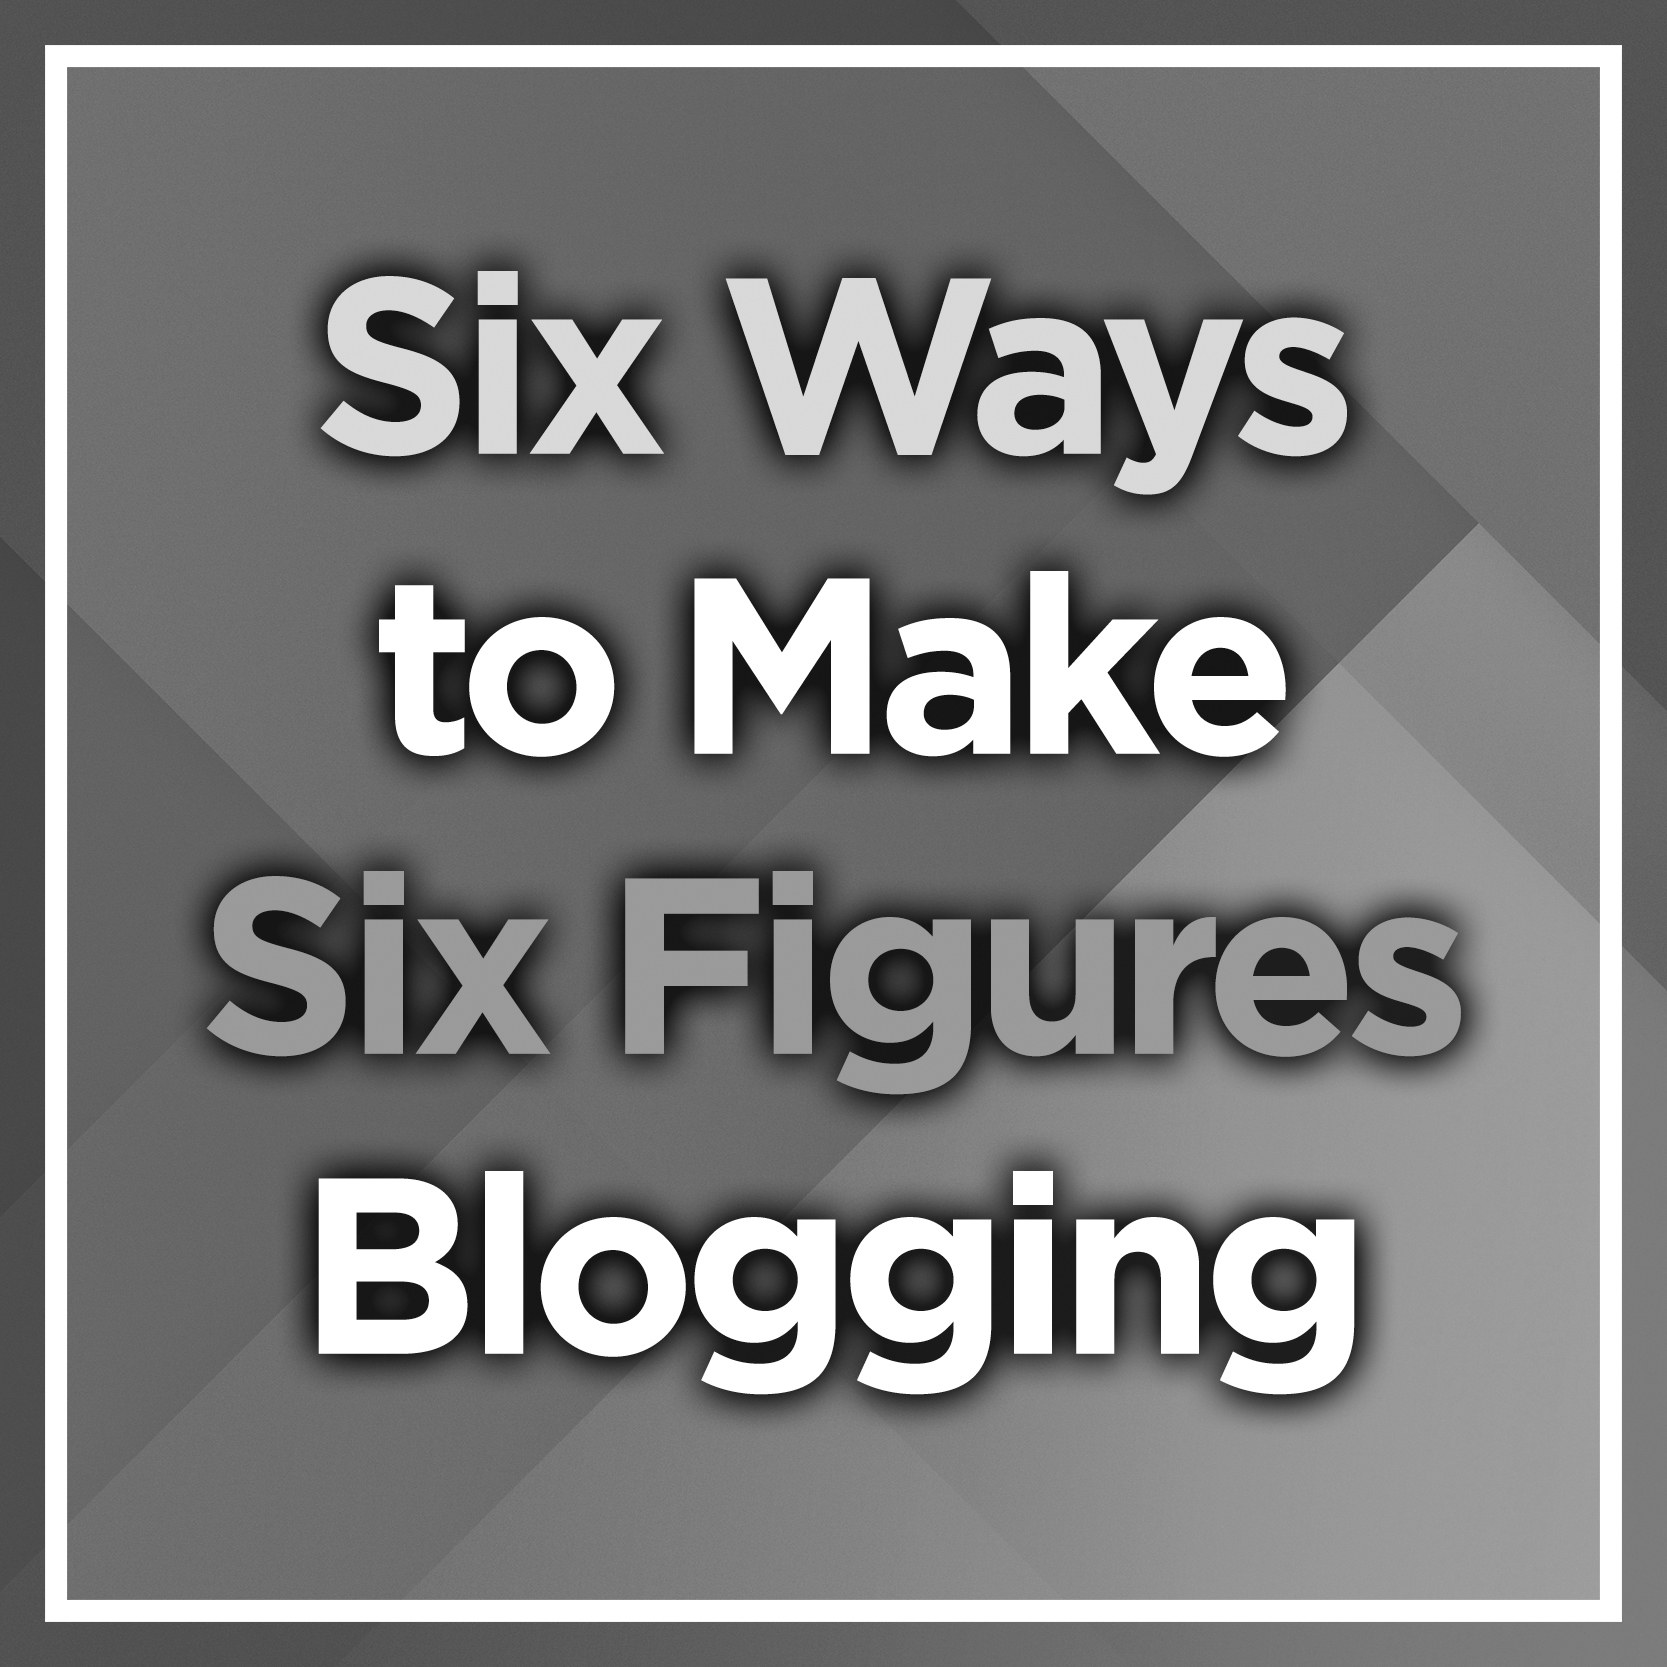 Six Ways to Make Six Figures Blogging